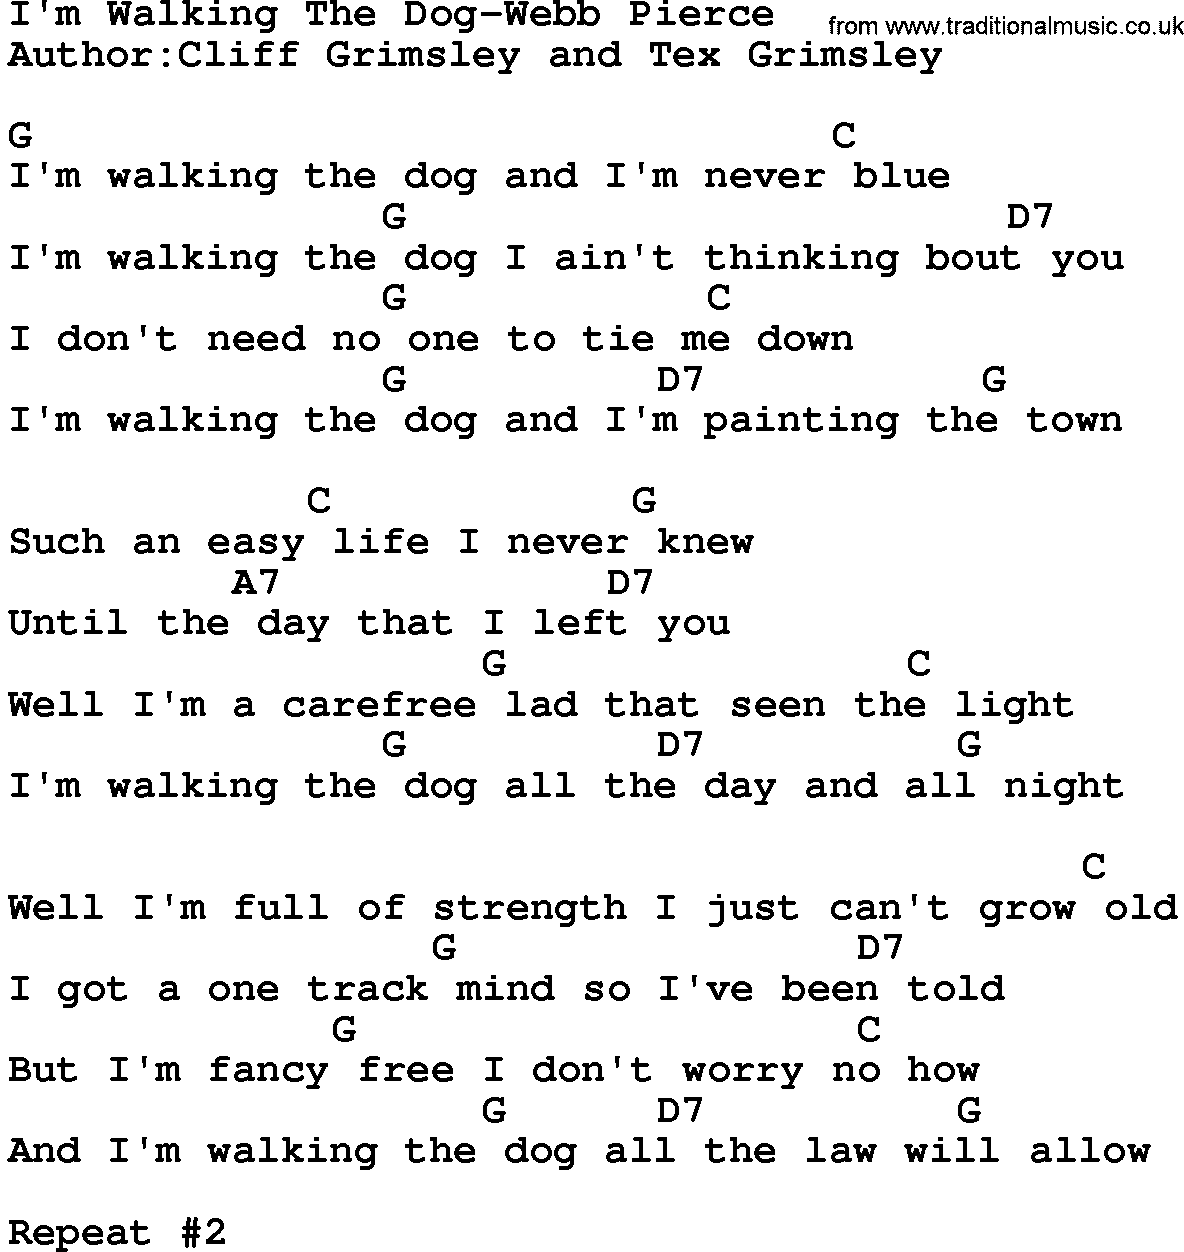 Country music song: I'm Walking The Dog-Webb Pierce lyrics and chords